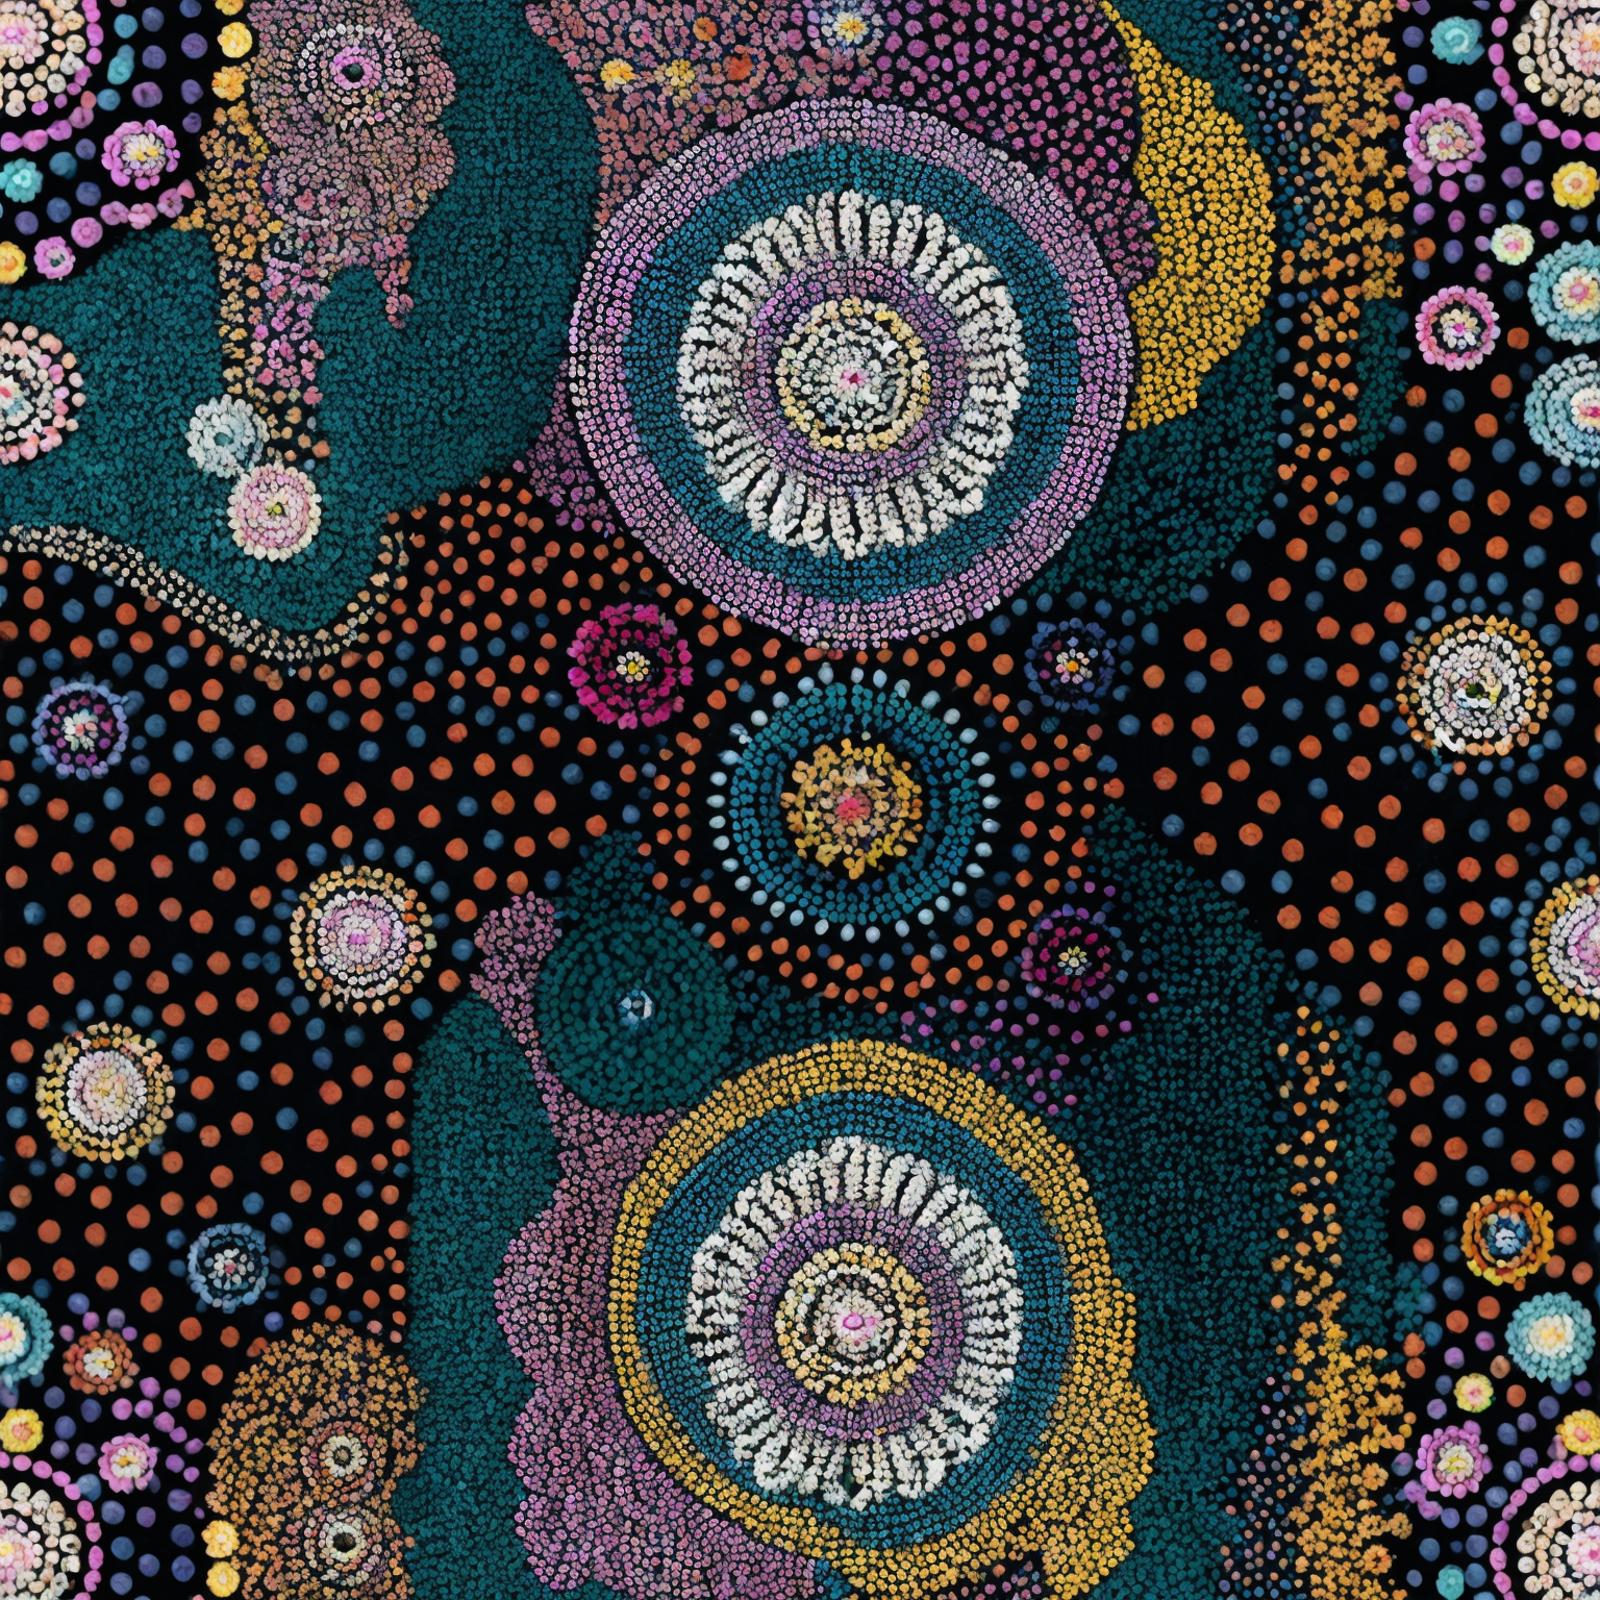 Indigenous Aboriginal Arts image by zwxai